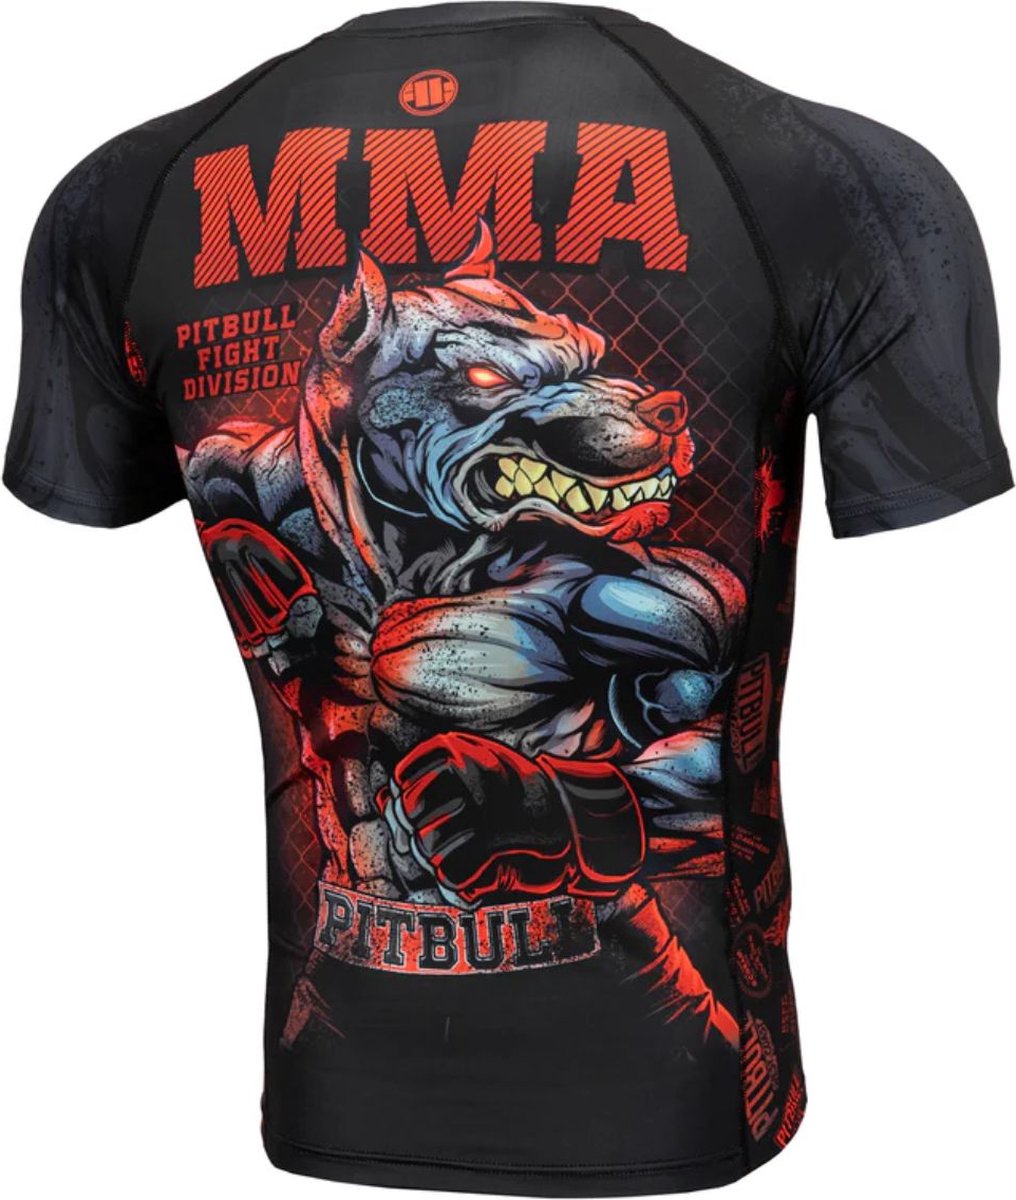 Pit Bull - Master of MMA - MMA Rashguard Short Sleeve - Vechtsport rashgaurd met korte mouwen - Compressie shirt - Zwart/ Rood - Maat XXL